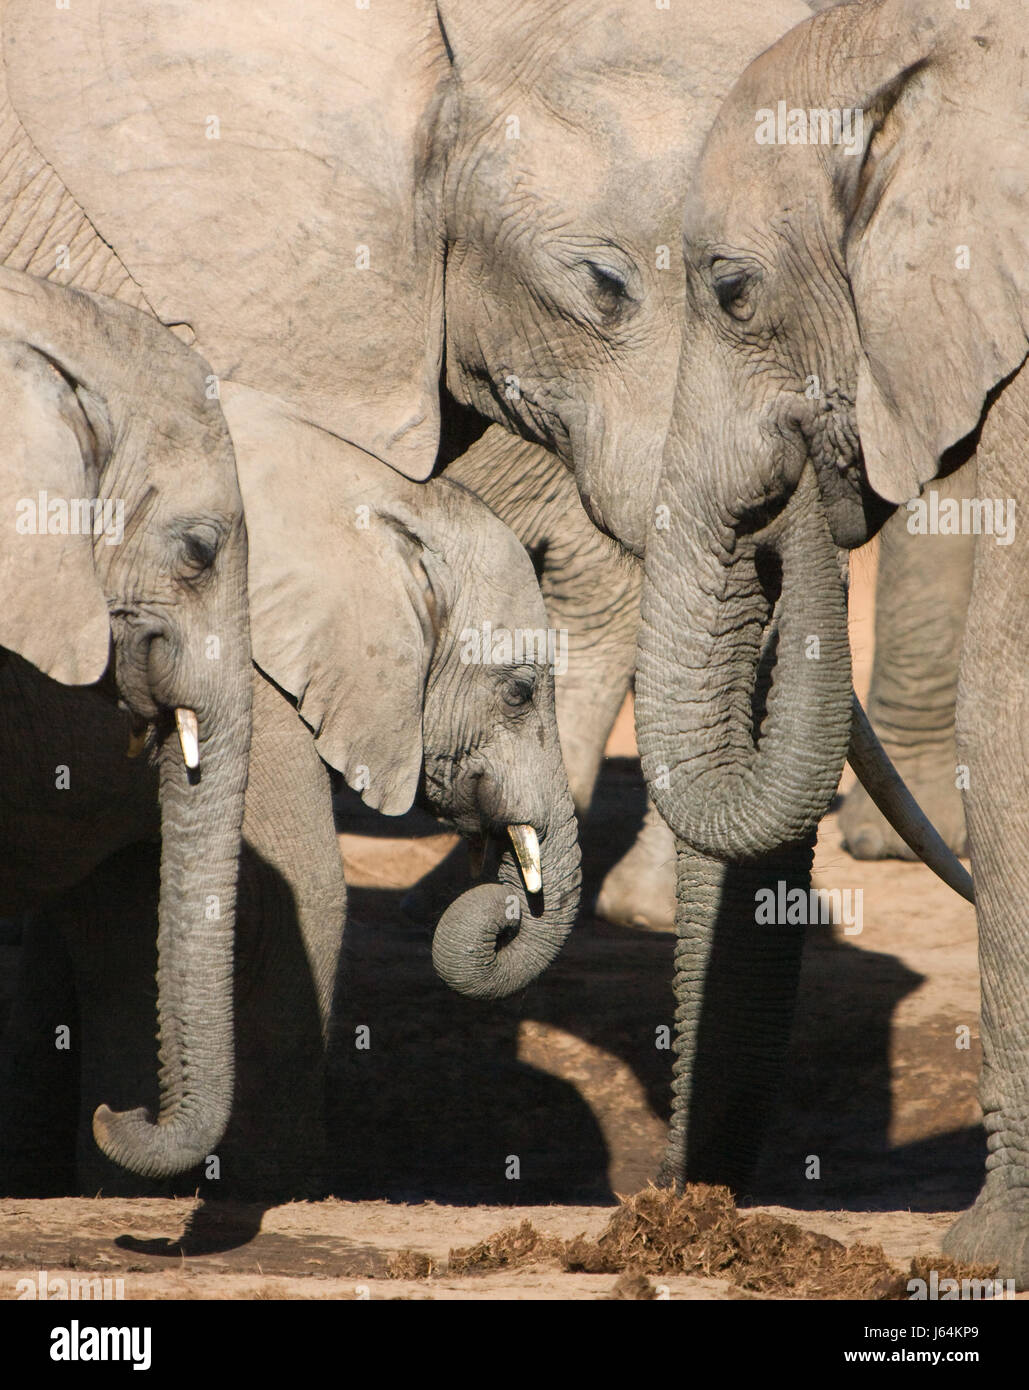 national park africa eyes elephants herd proboscis piece section segment part Stock Photo